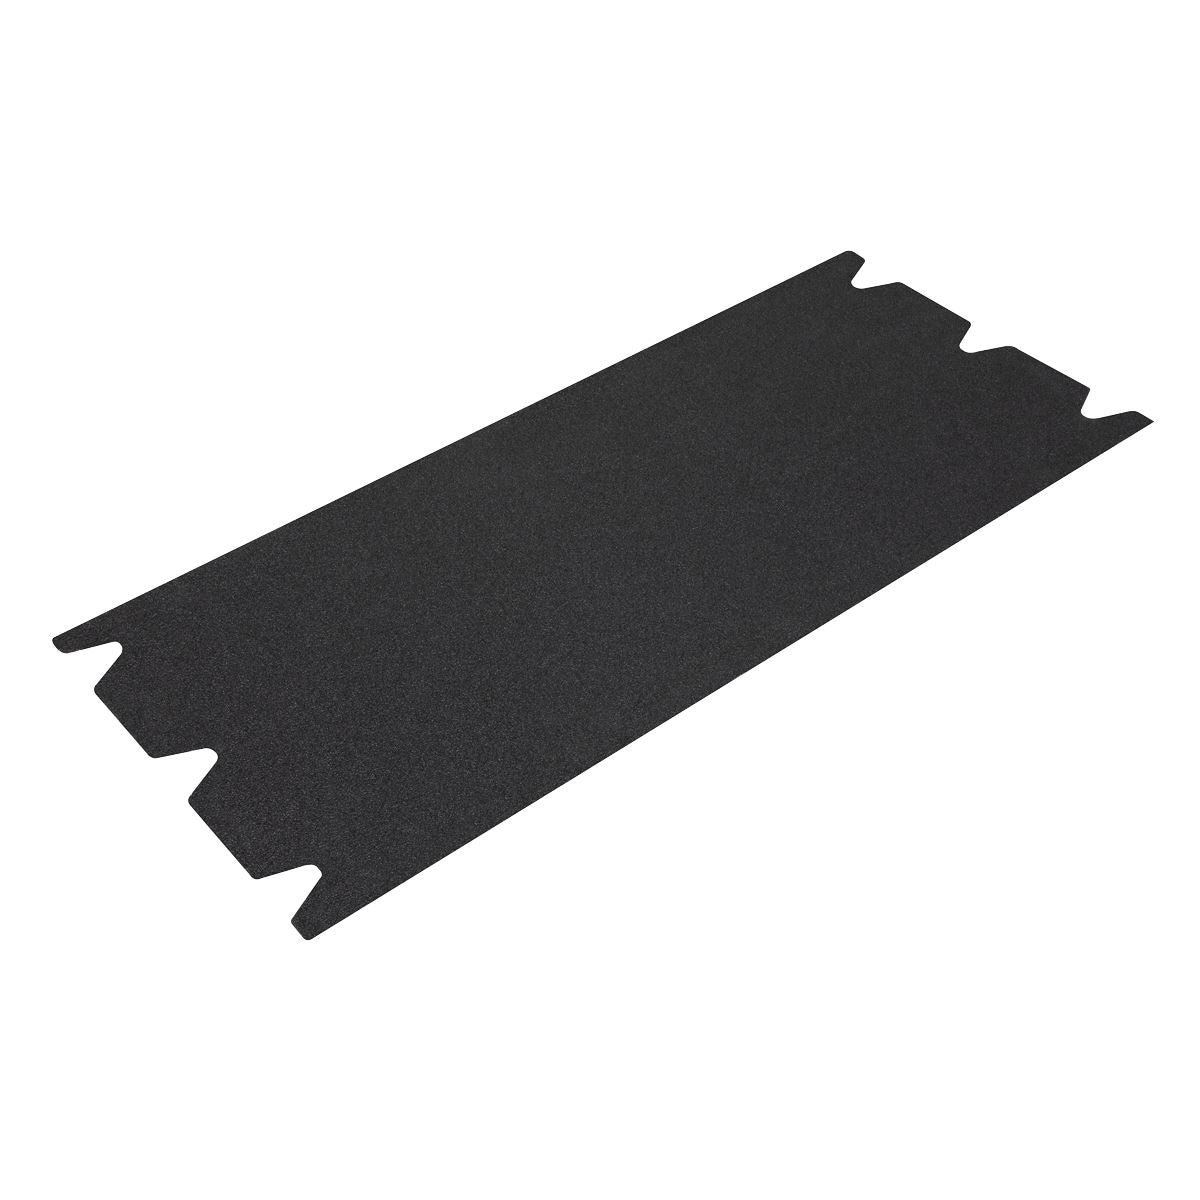 Sealey Floor Sanding Sheet 205 x 470mm 40Grit - Pack of 25